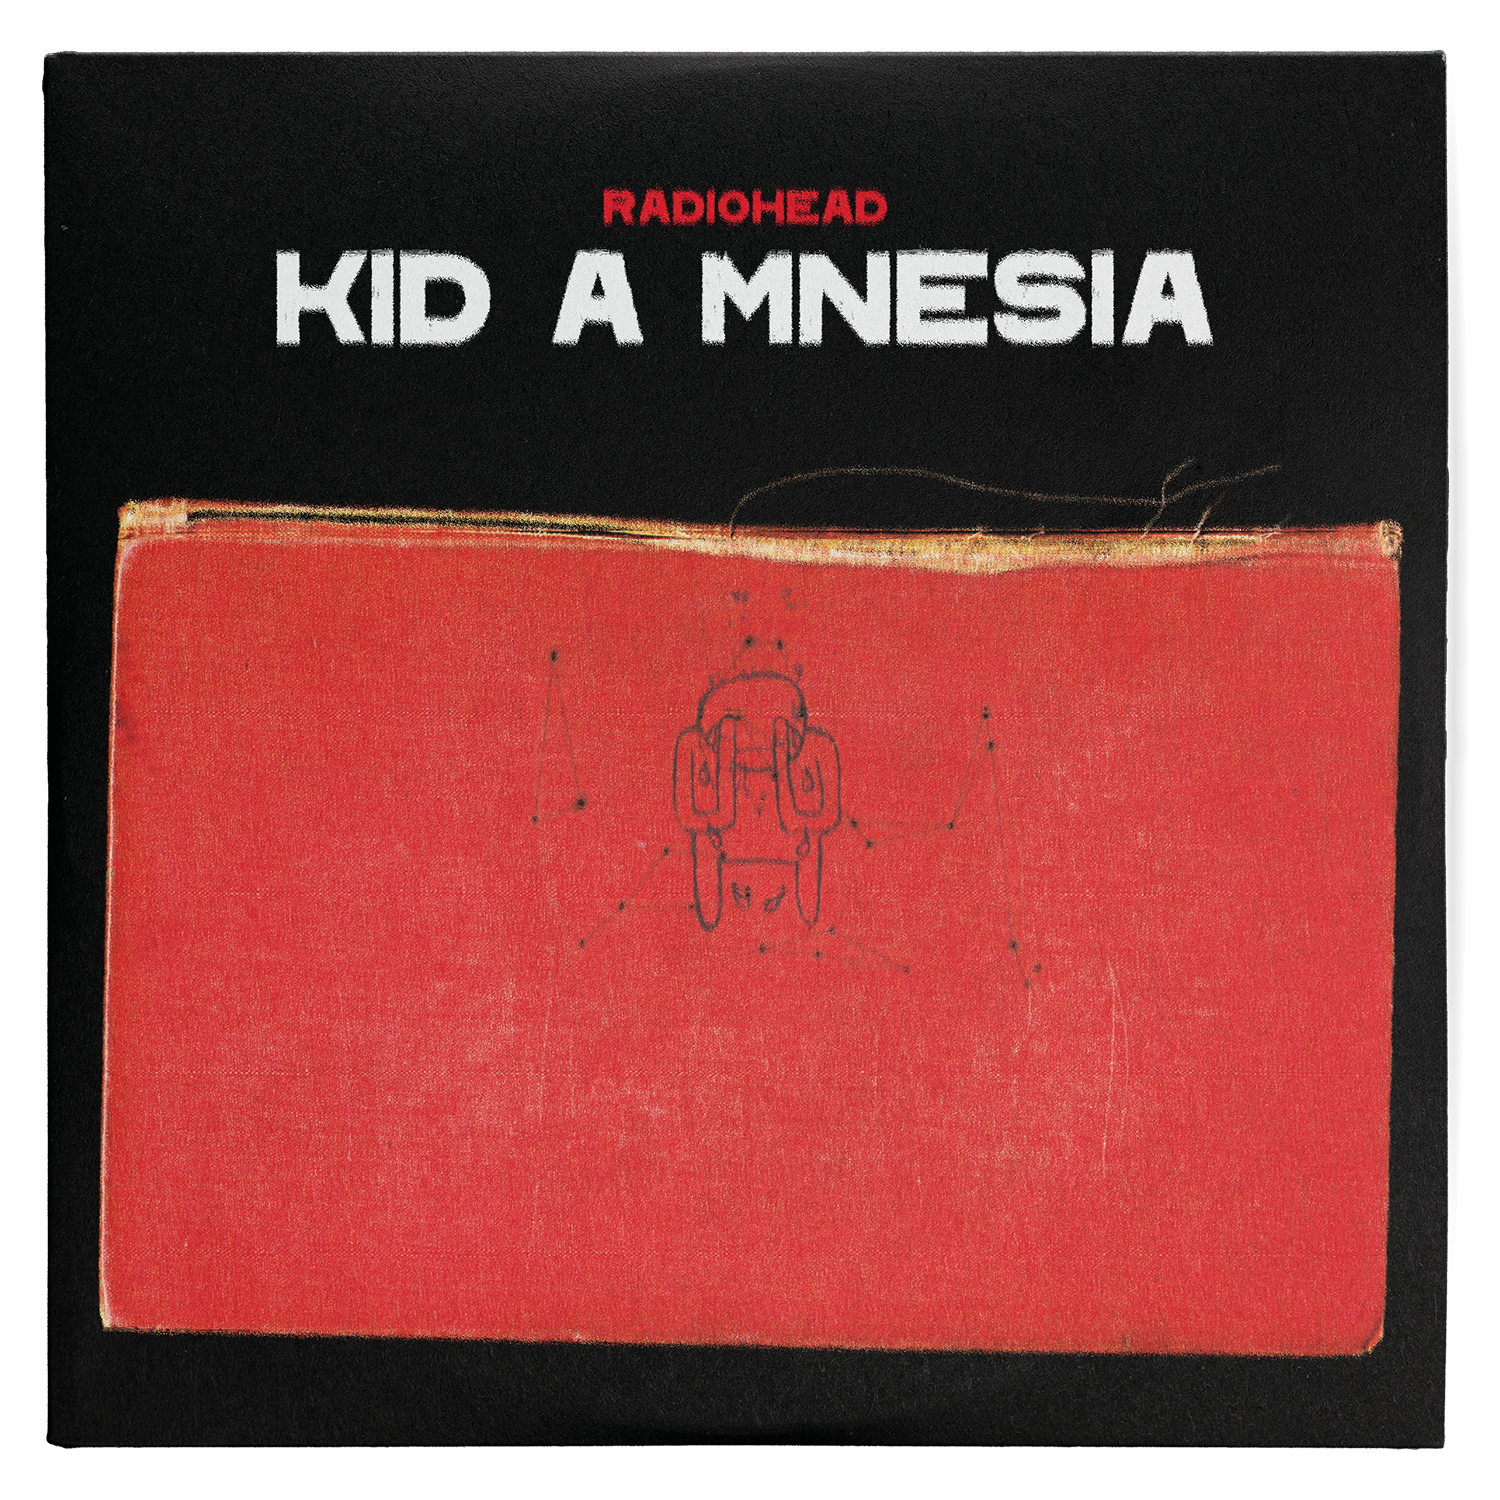 Radiohead - KID A MNESIA 3LP Edition